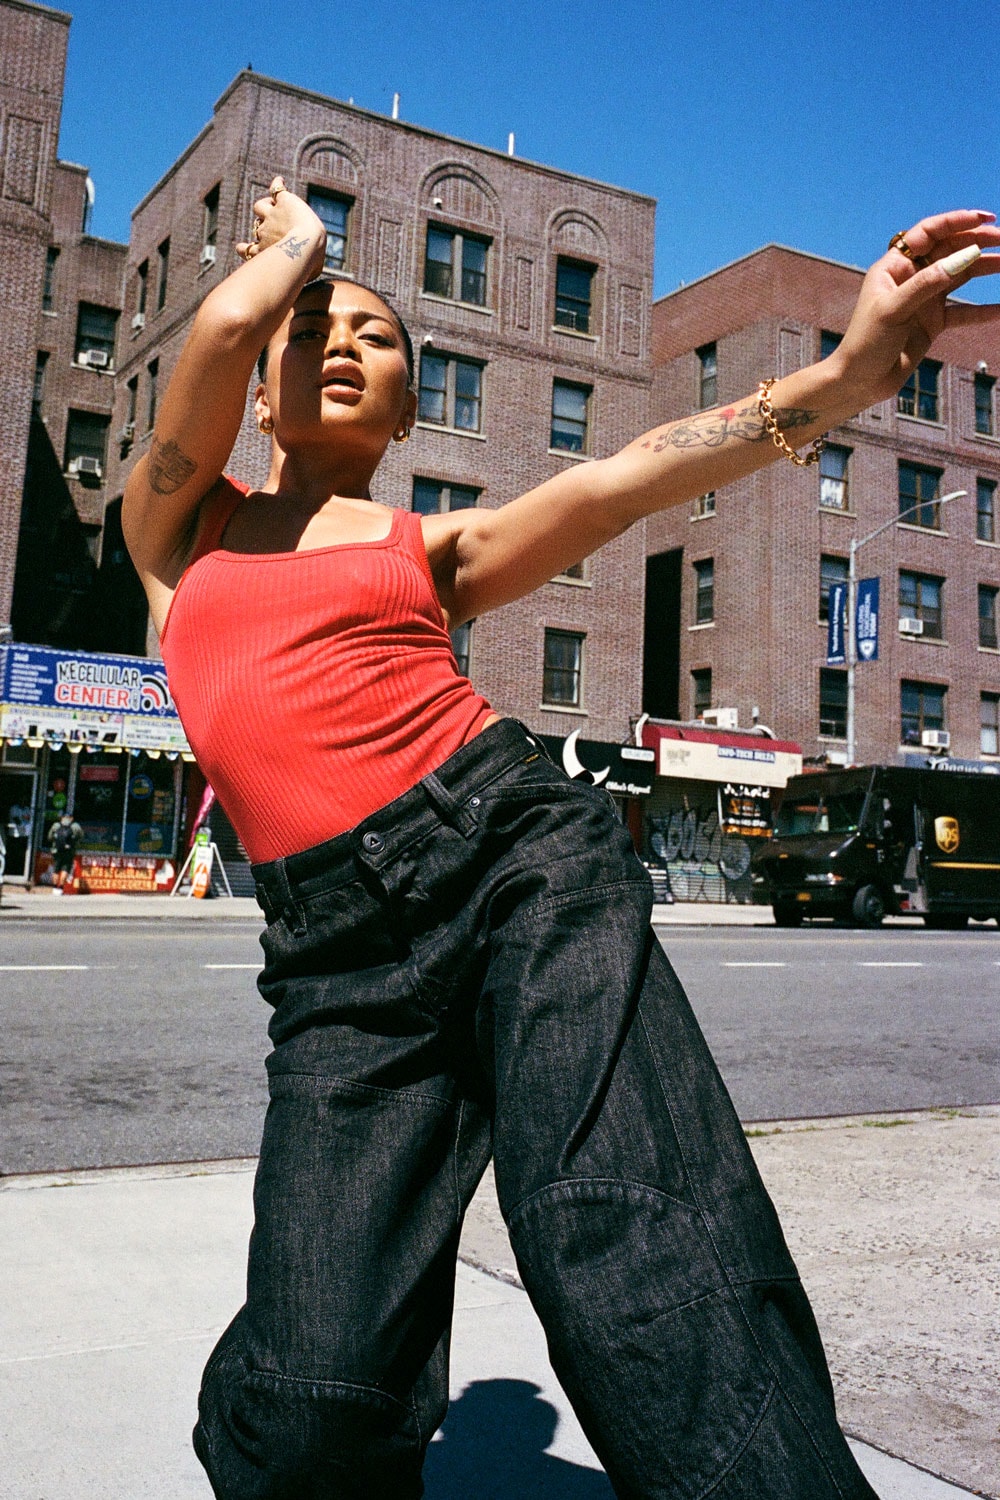 g-star raw pauline casiño elwood 3d denim jeans relaunch new york city nyc street dance scene club culture